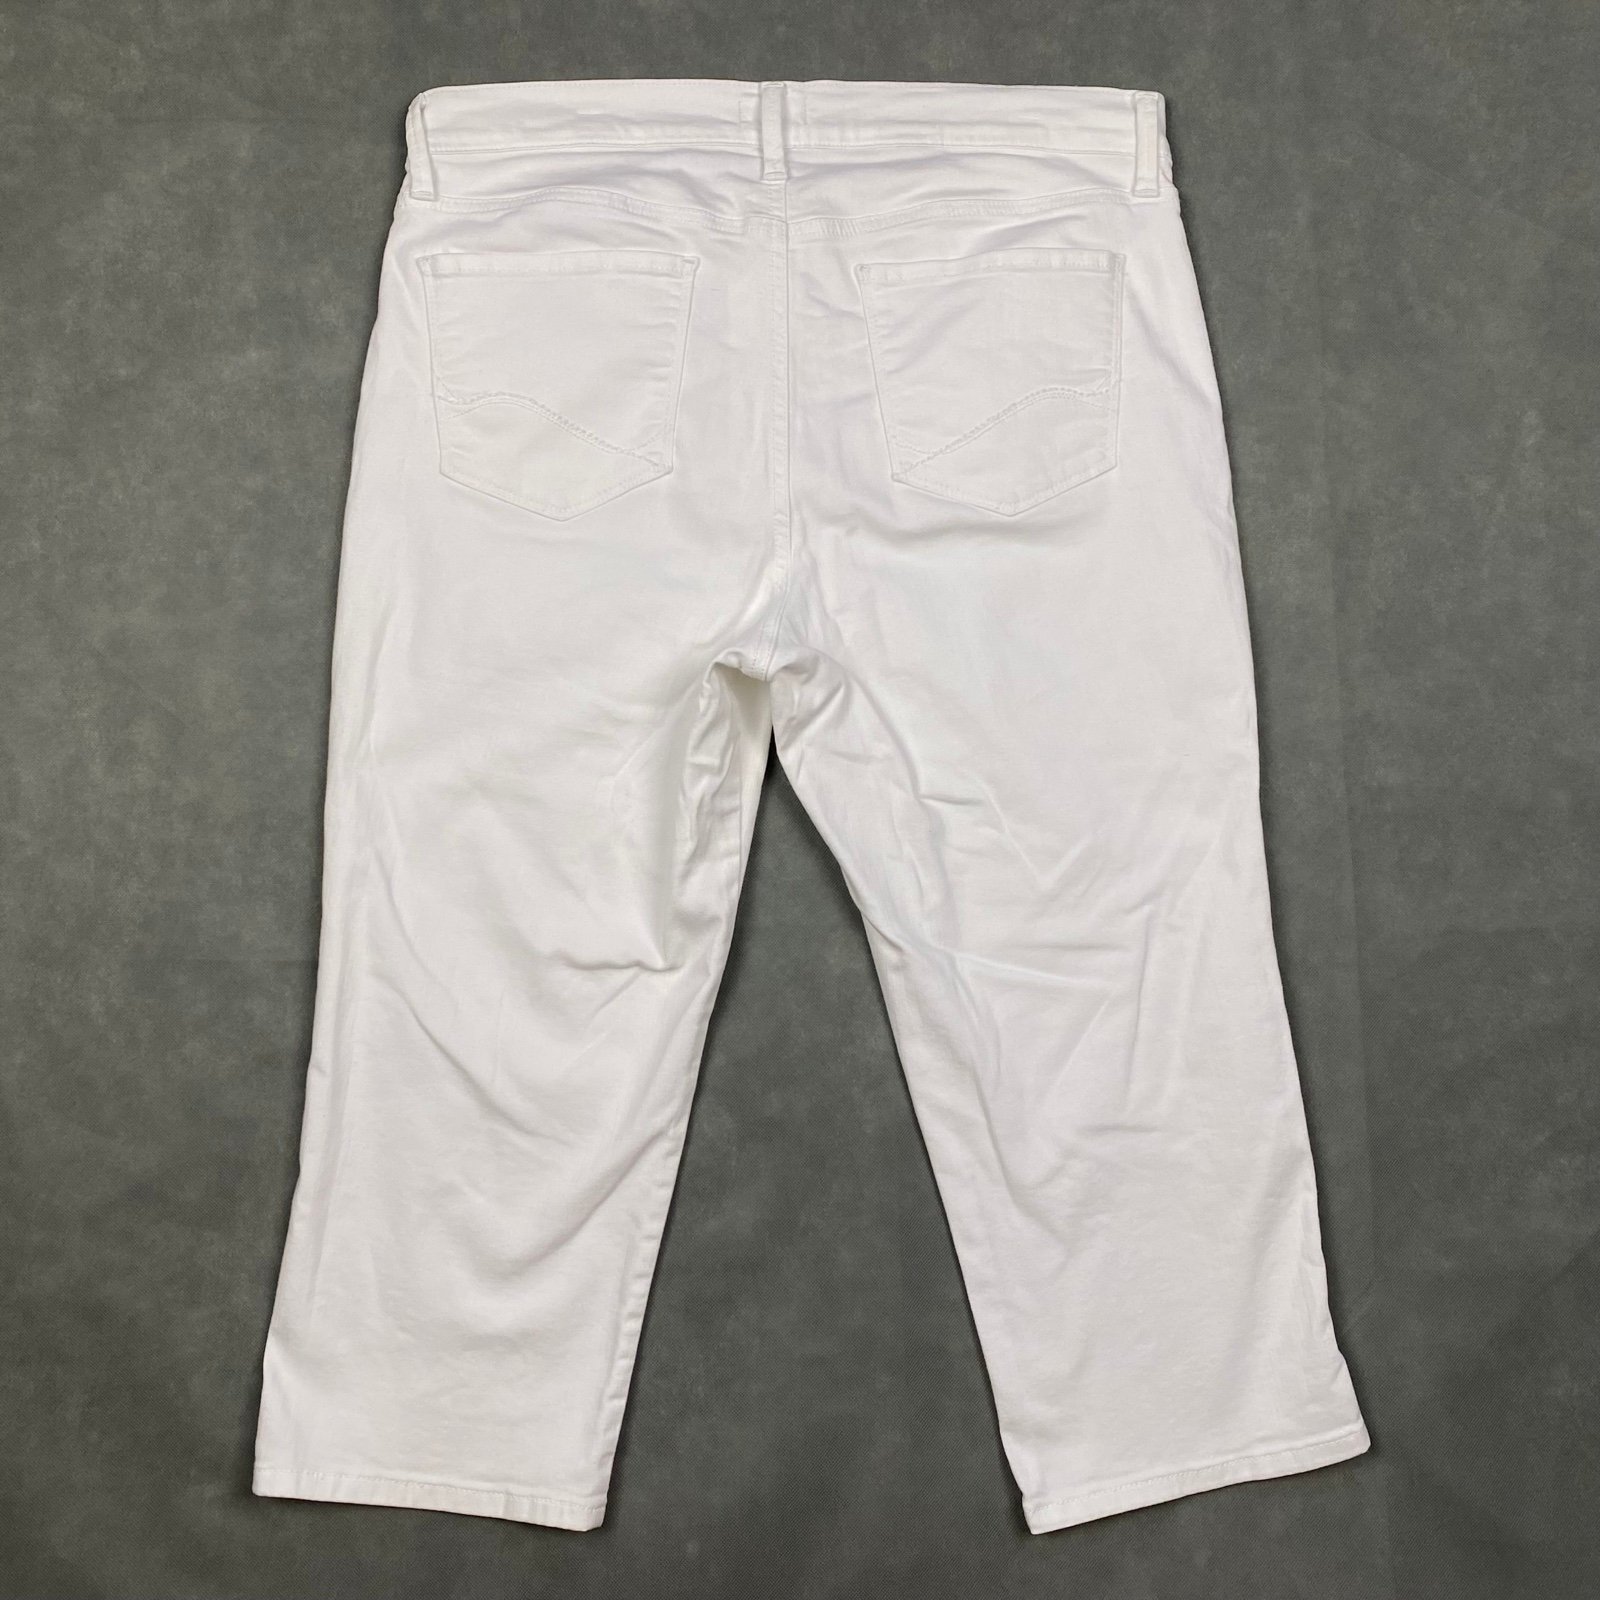 big discount NYDJ White Ariel Crop Capri Jeans Lift Tuck - Size 14 Jj4pLnClZ Fashion